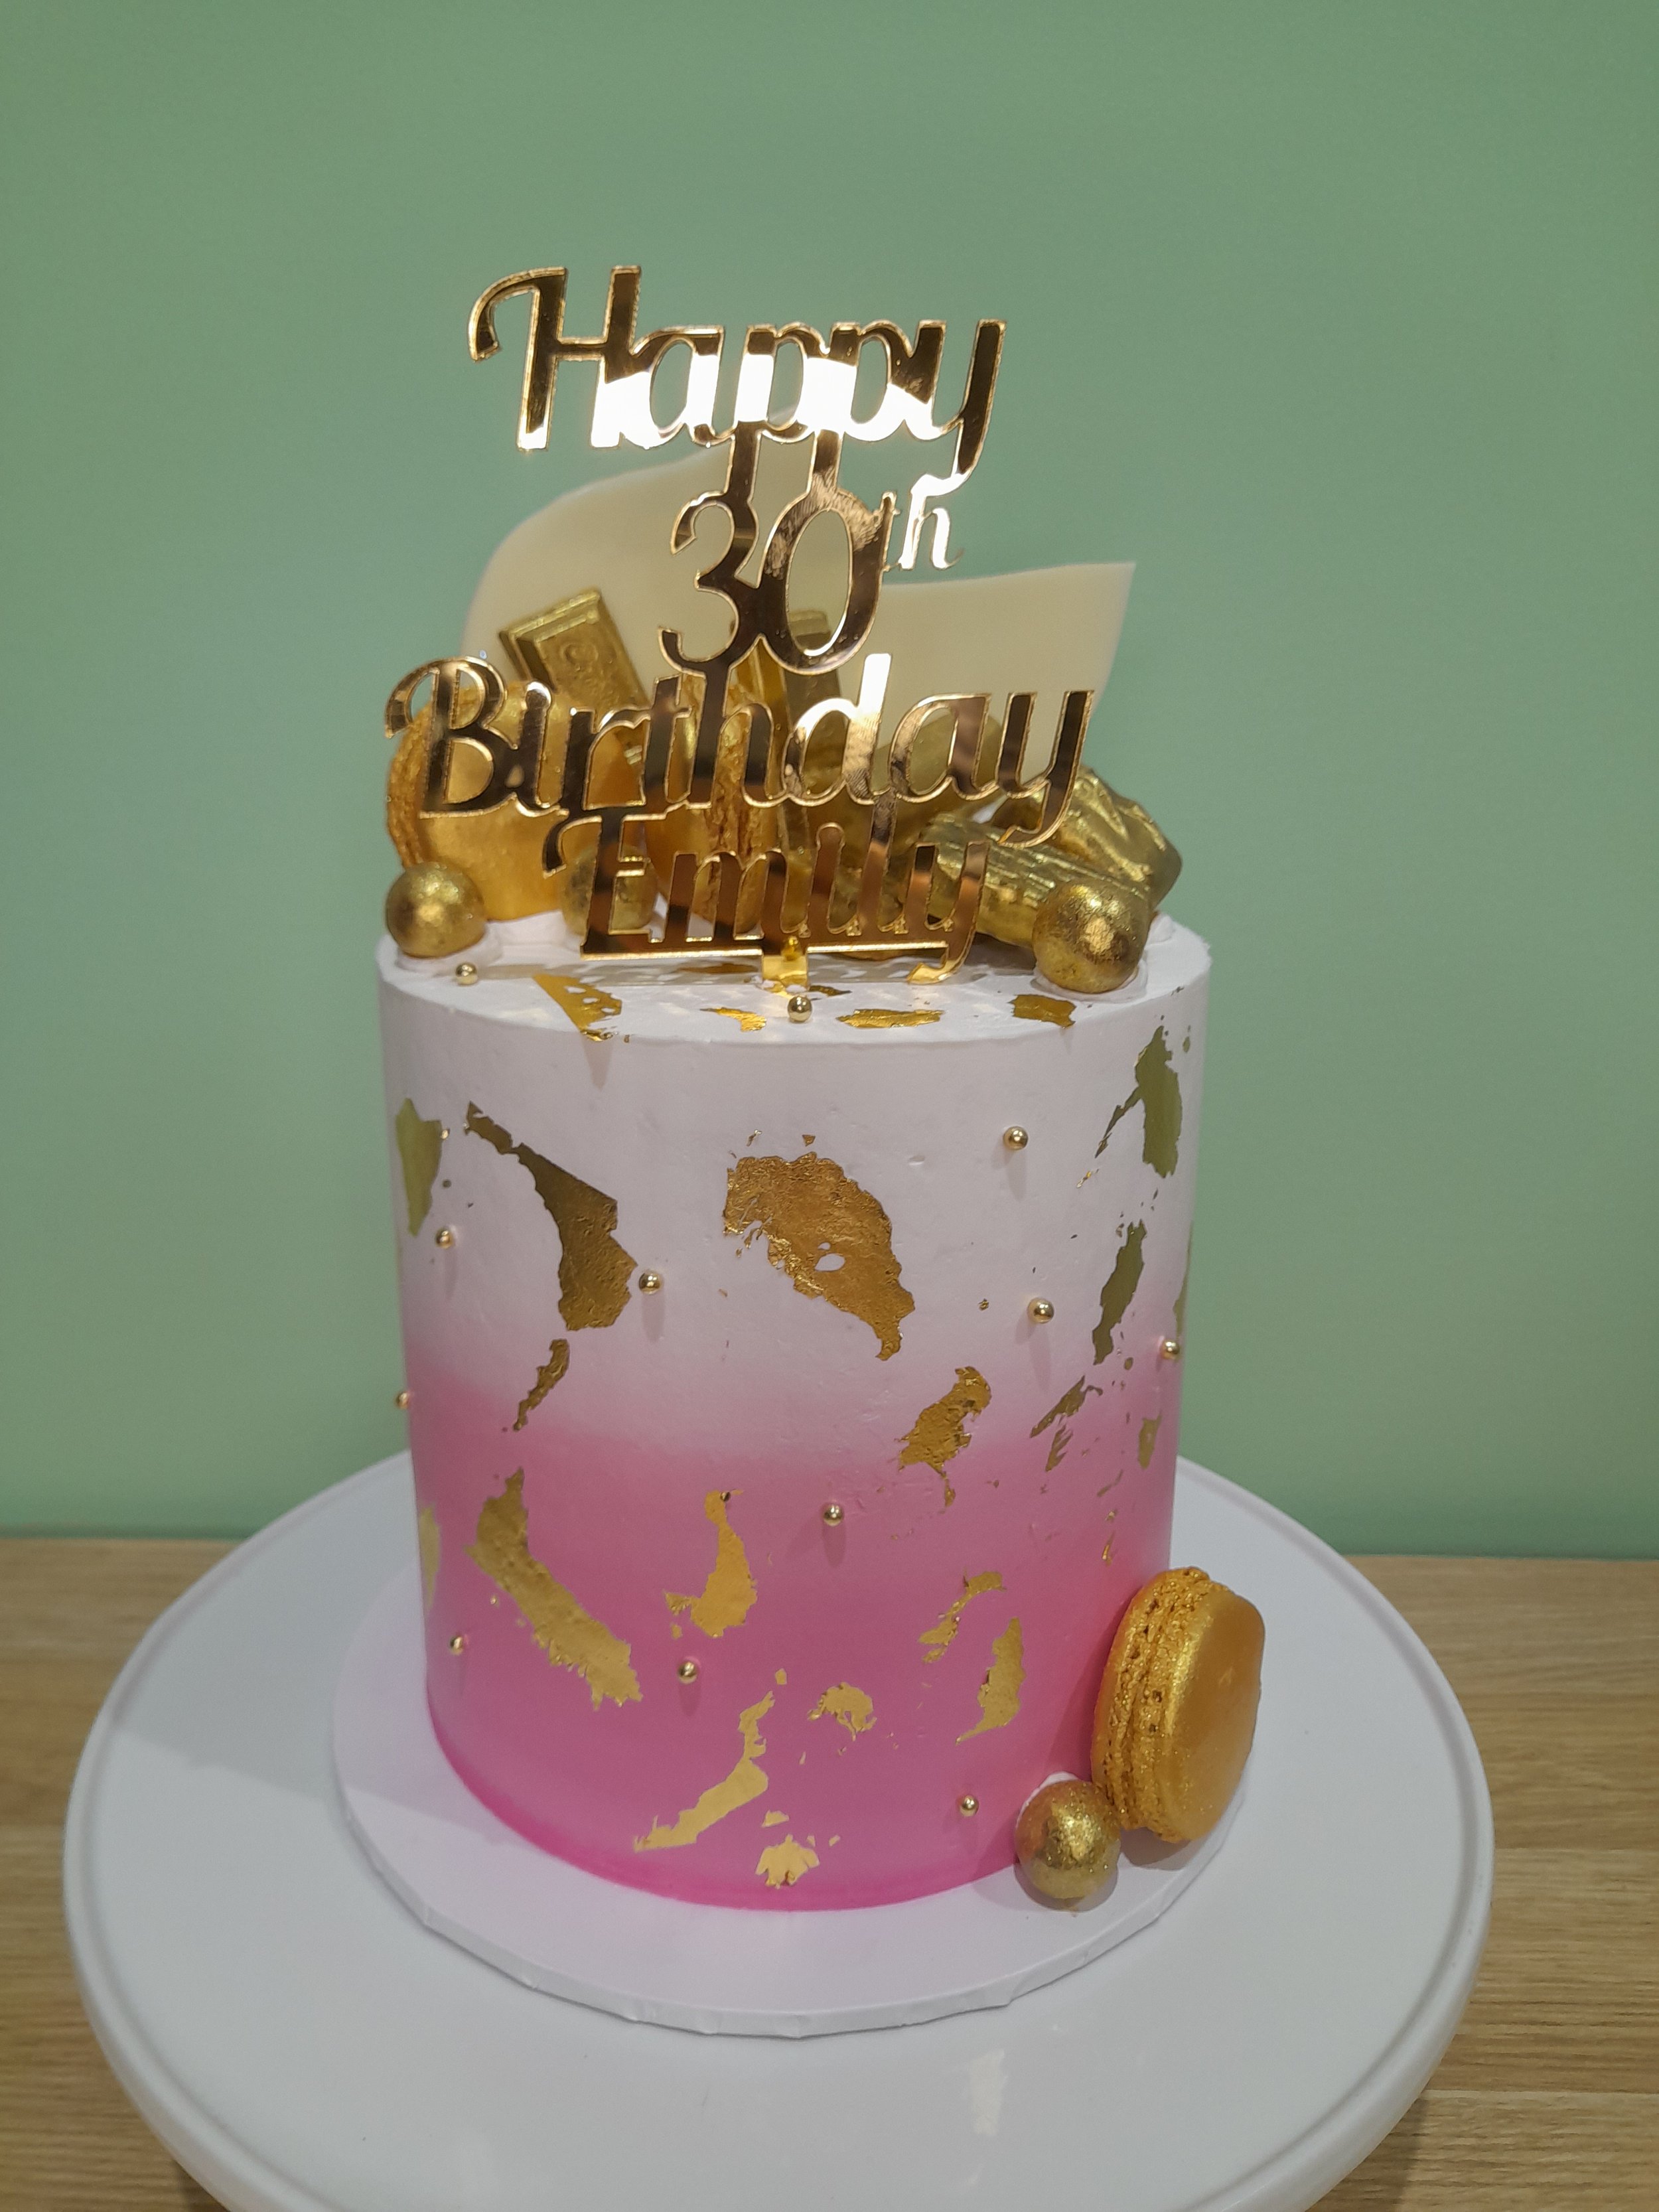 Glam 30th birthday cake - Eve's Cakes